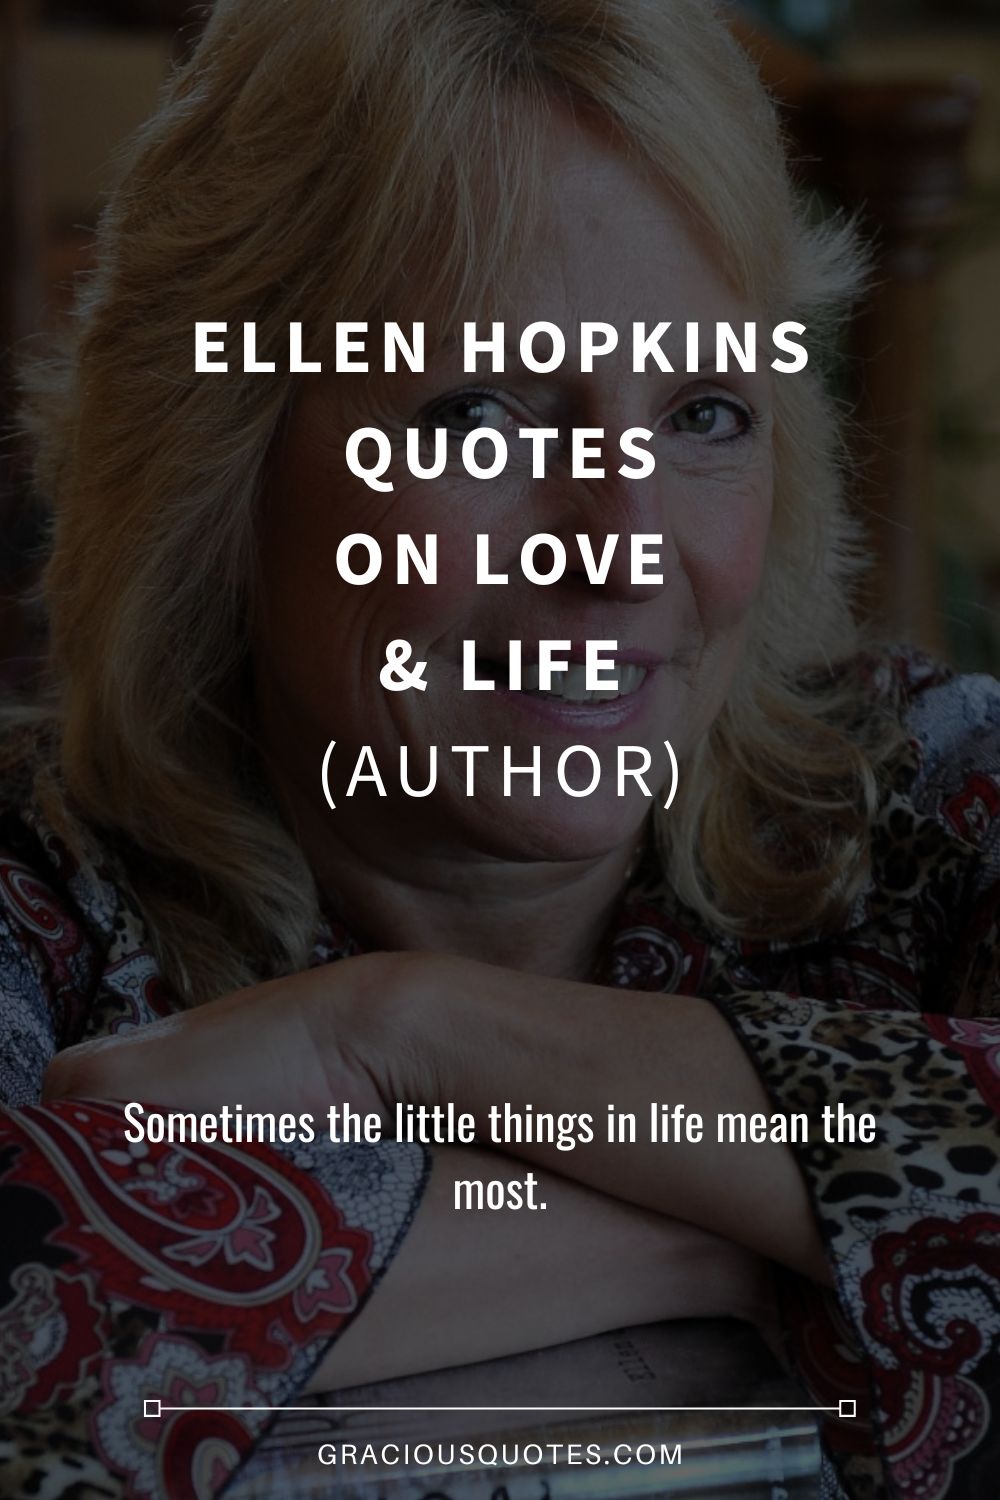 Ellen Hopkins Quotes on Love & Life (AUTHOR) - Gracious Quotes